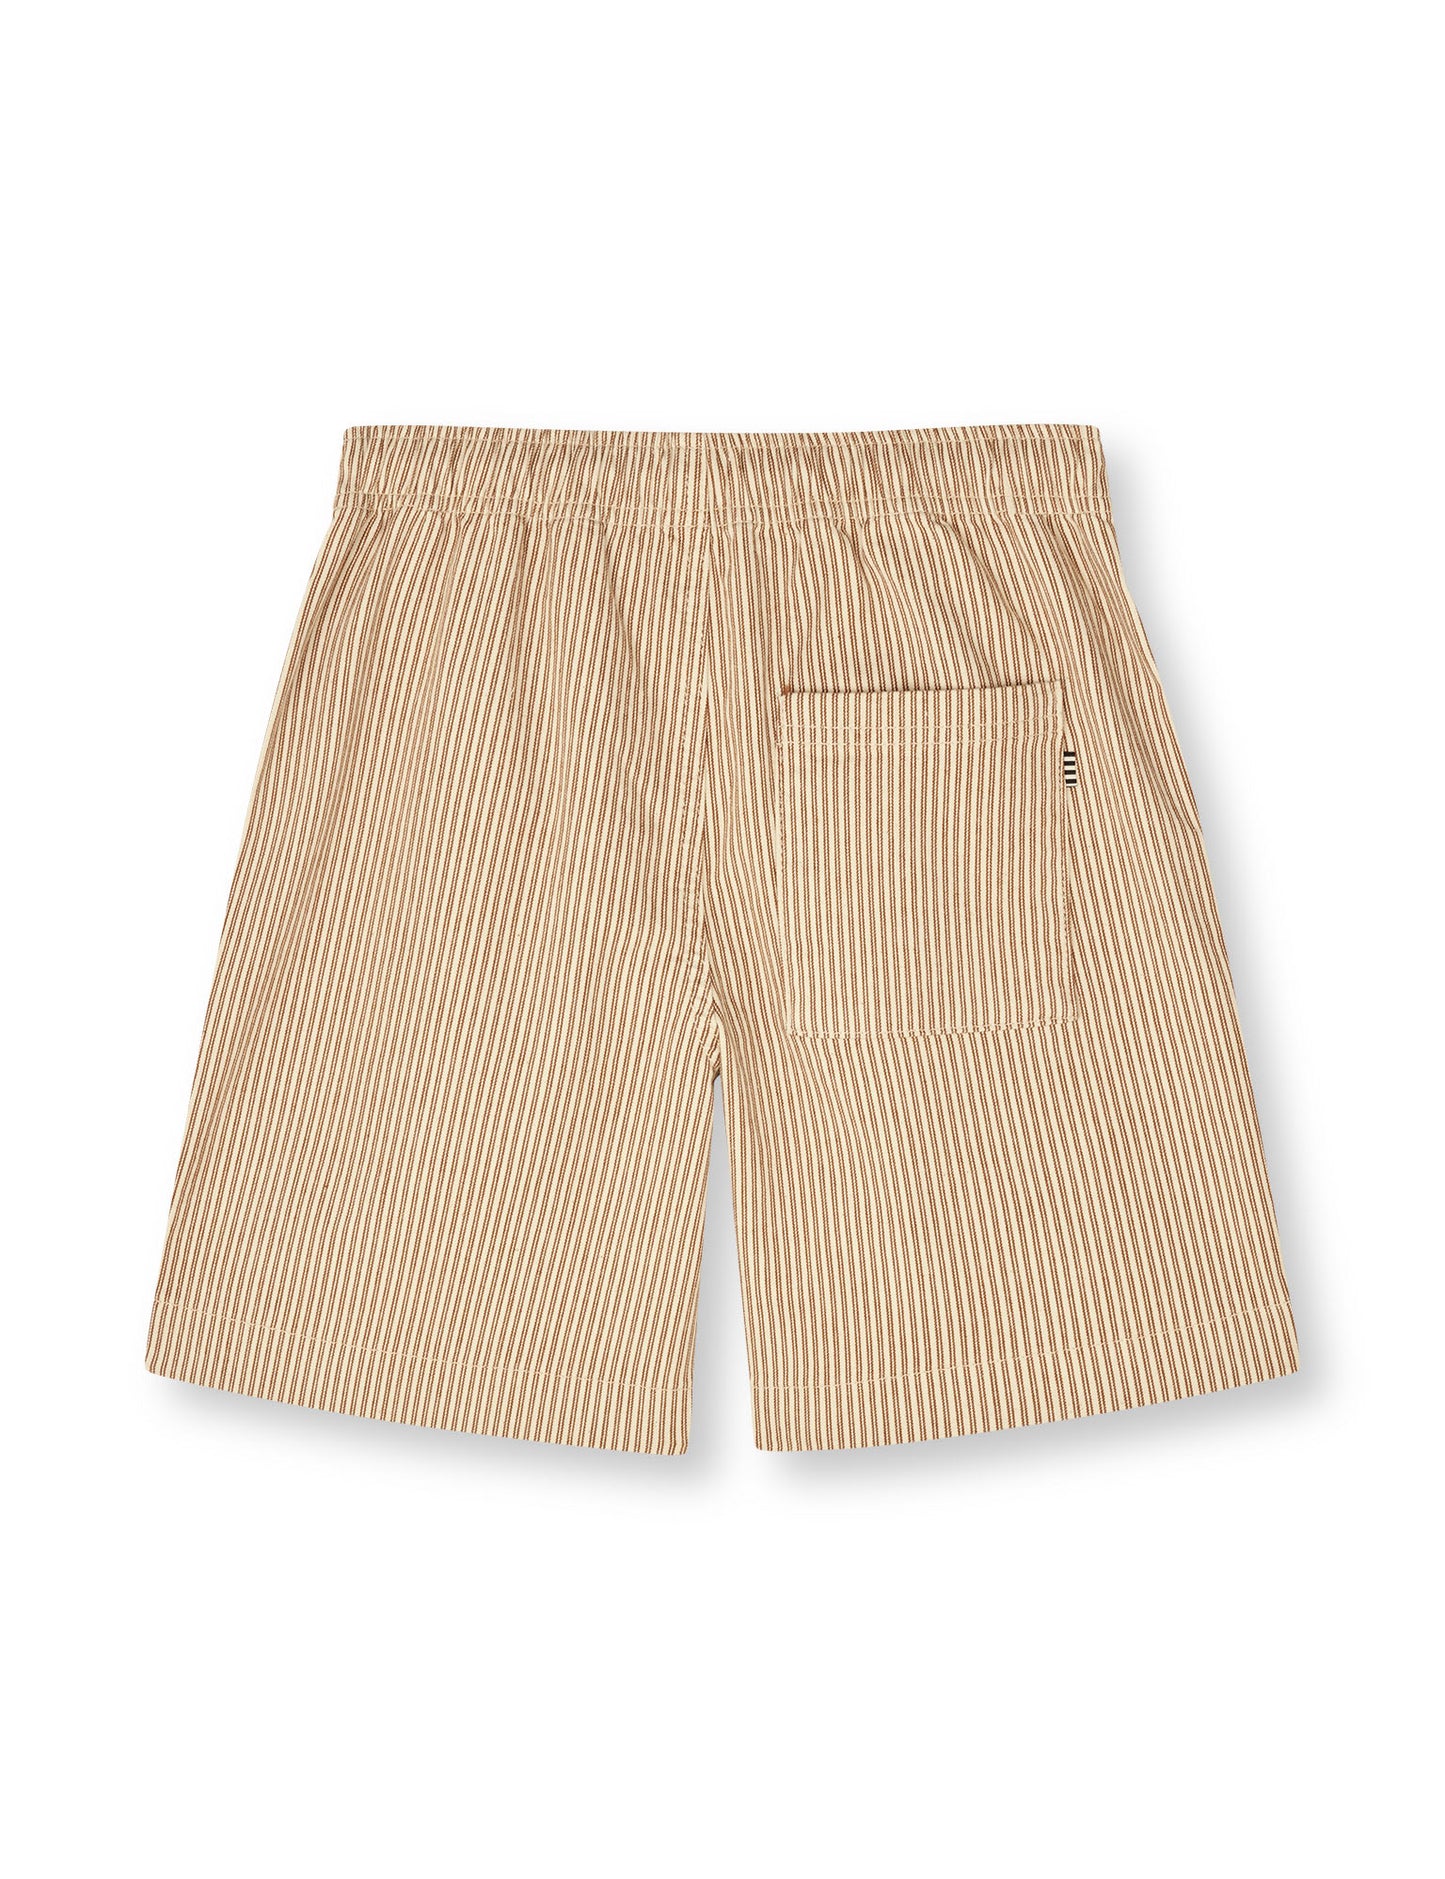 Bromi Seano Shorts, Partridge/Whitecap Gray